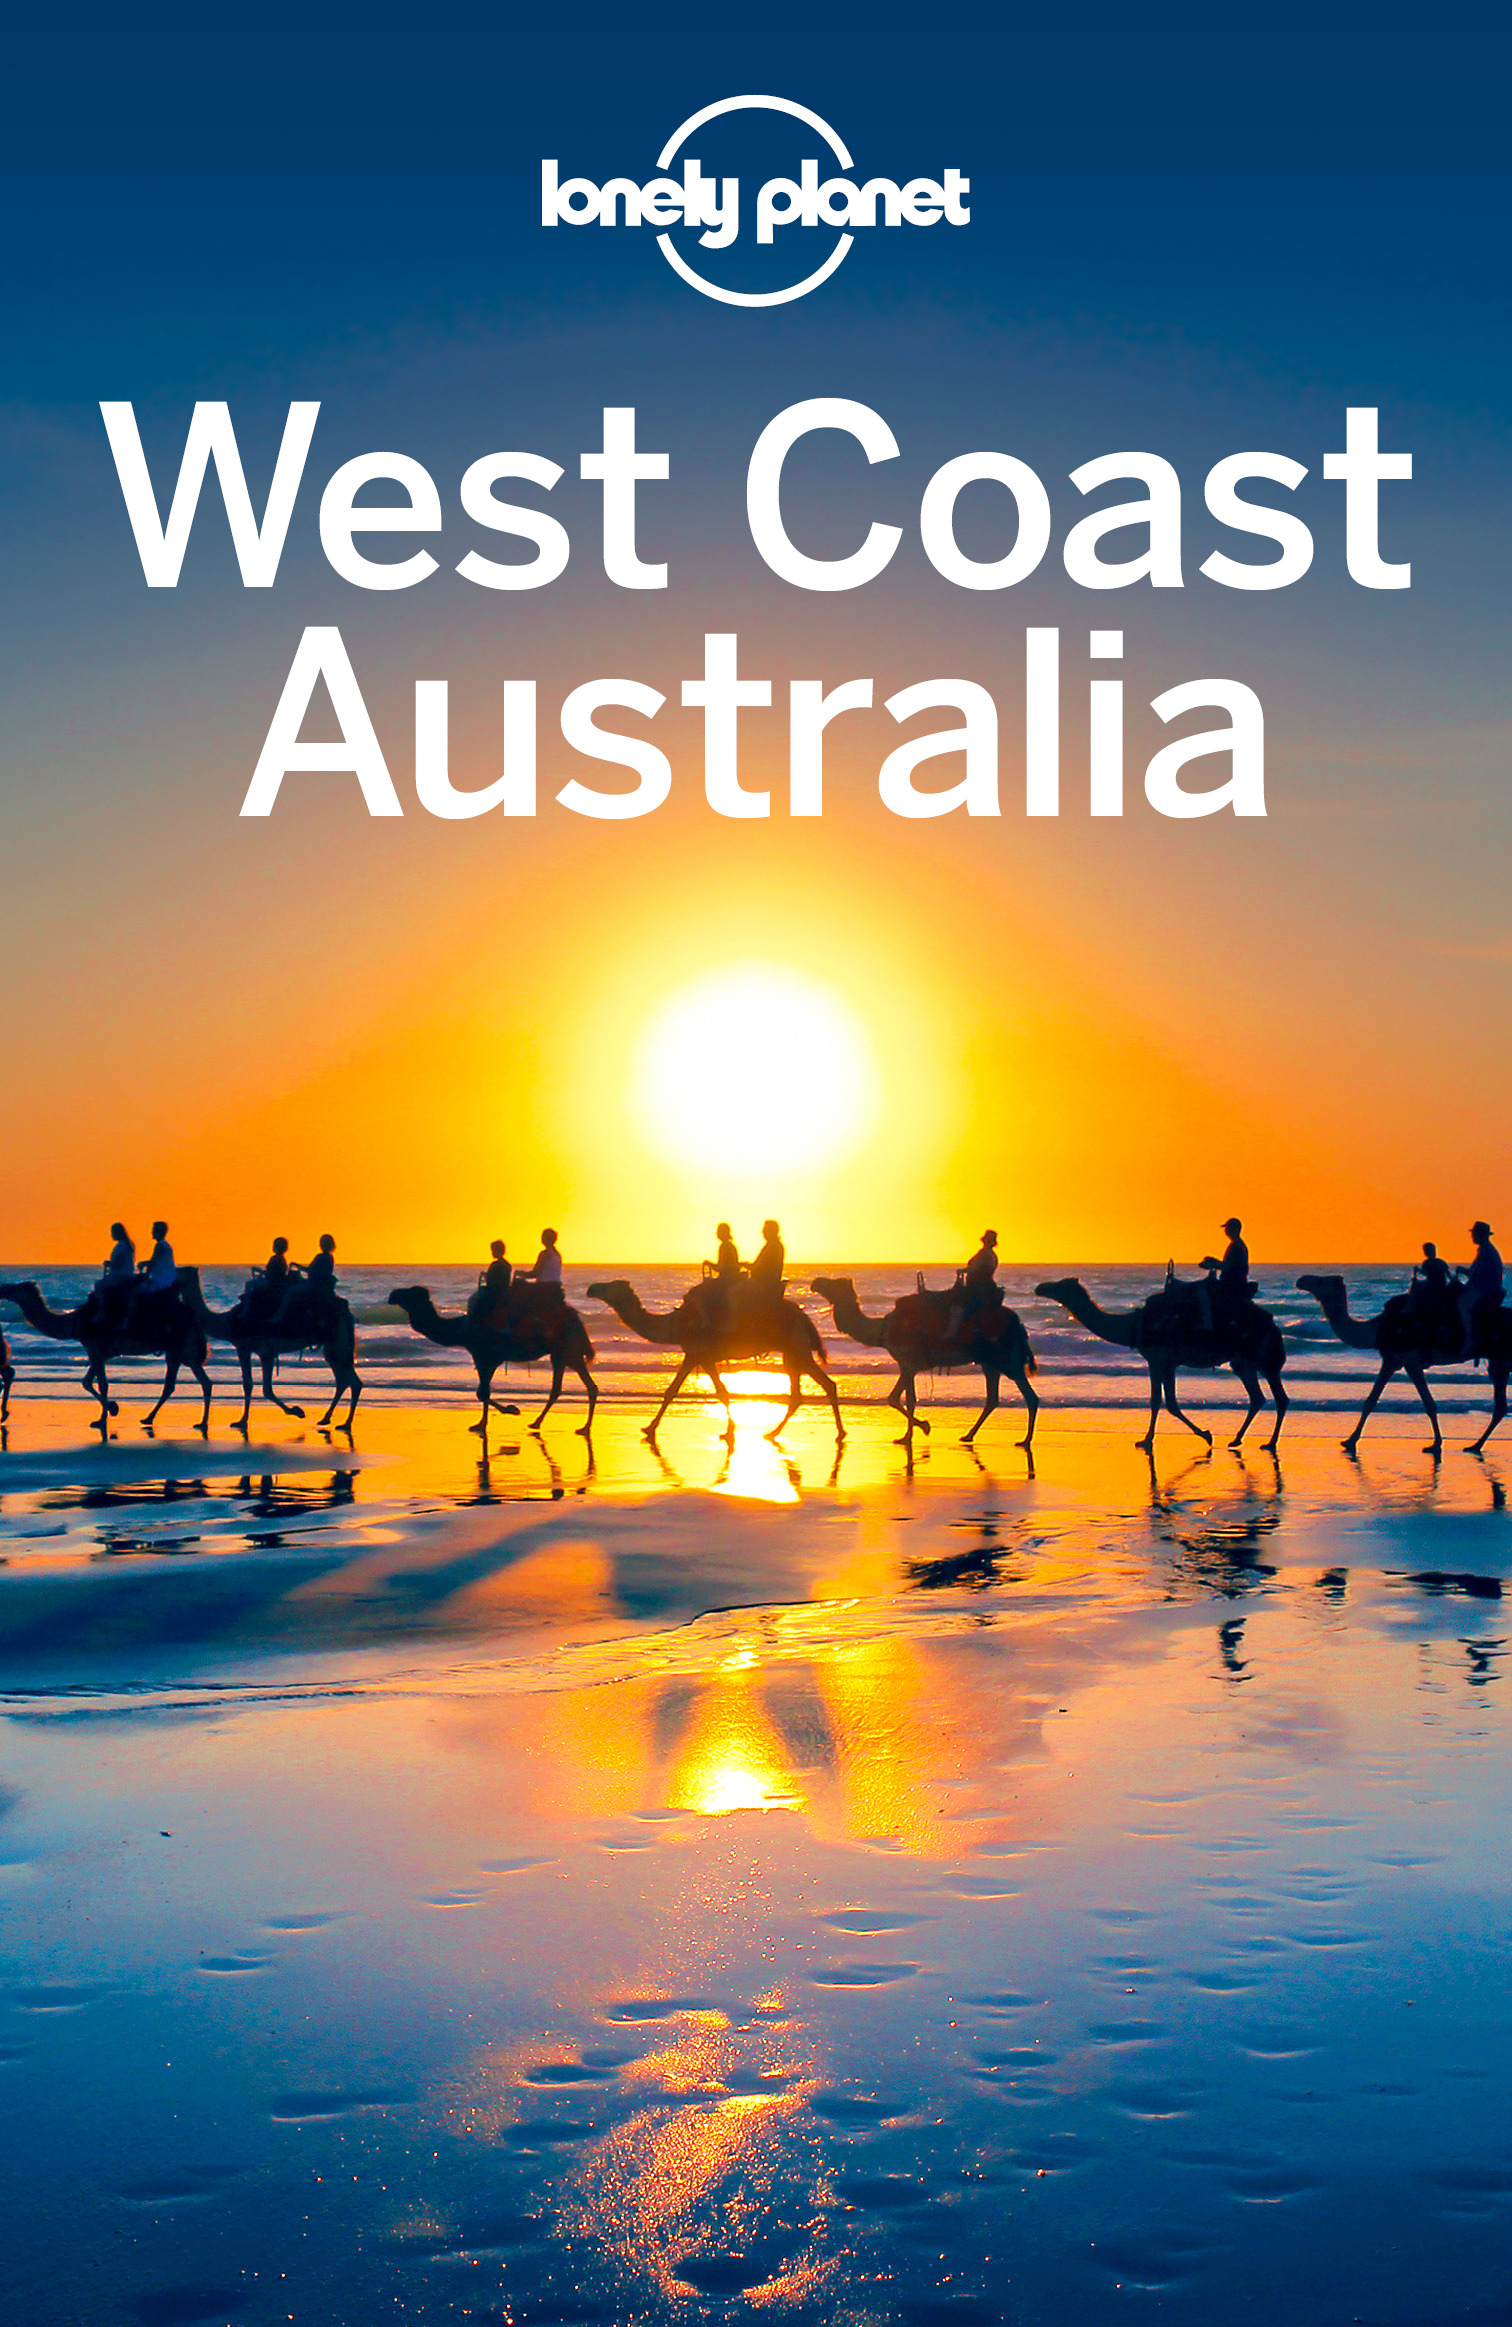 Planet, Lonely - Lonely Planet West Coast Australia, e-bok